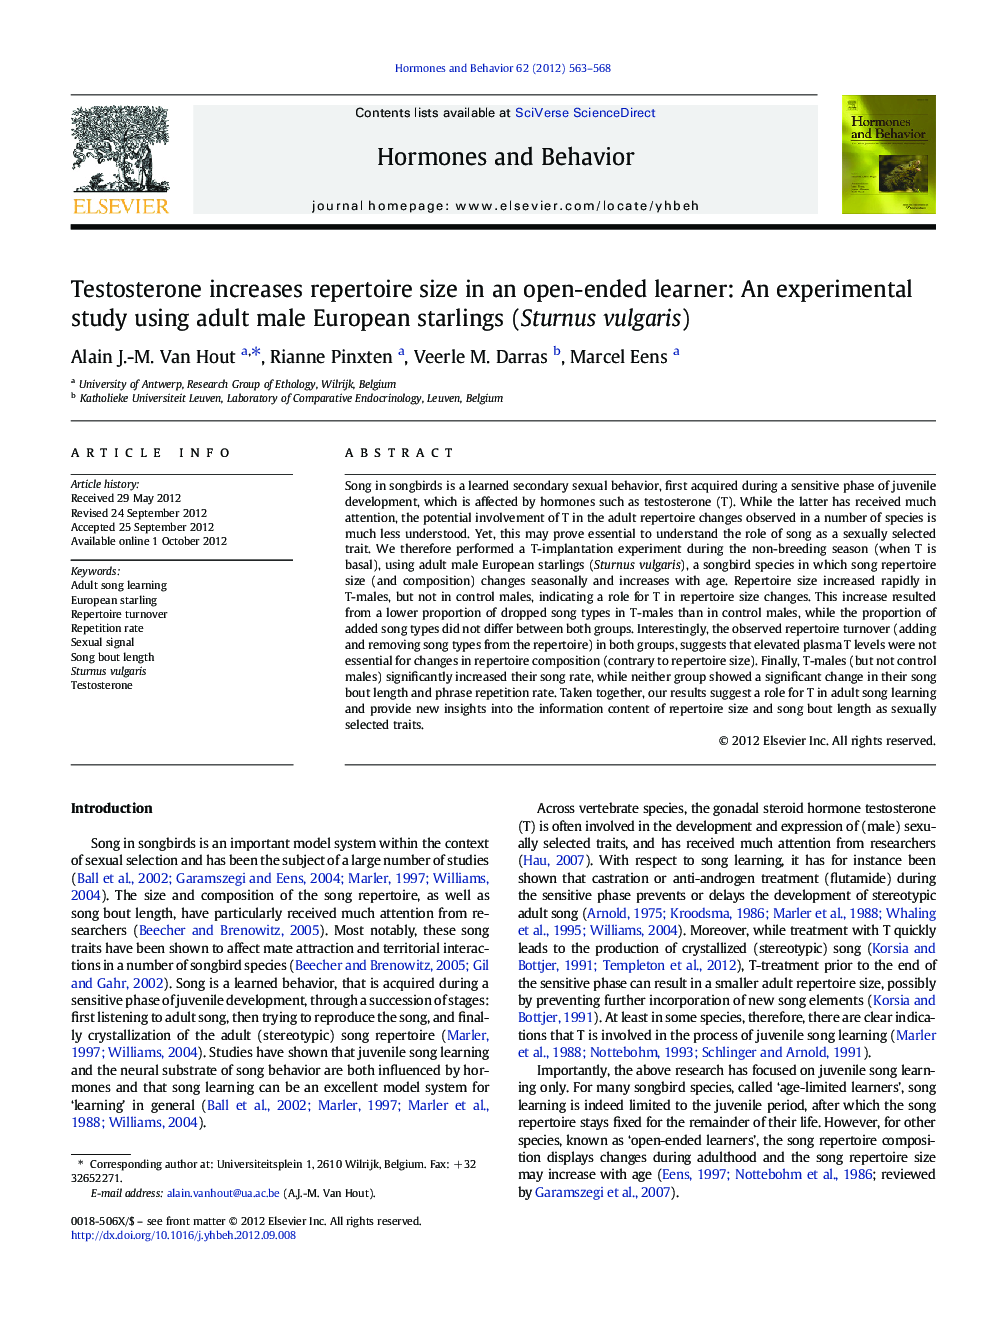 Testosterone increases repertoire size in an open-ended learner: An experimental study using adult male European starlings (Sturnus vulgaris)